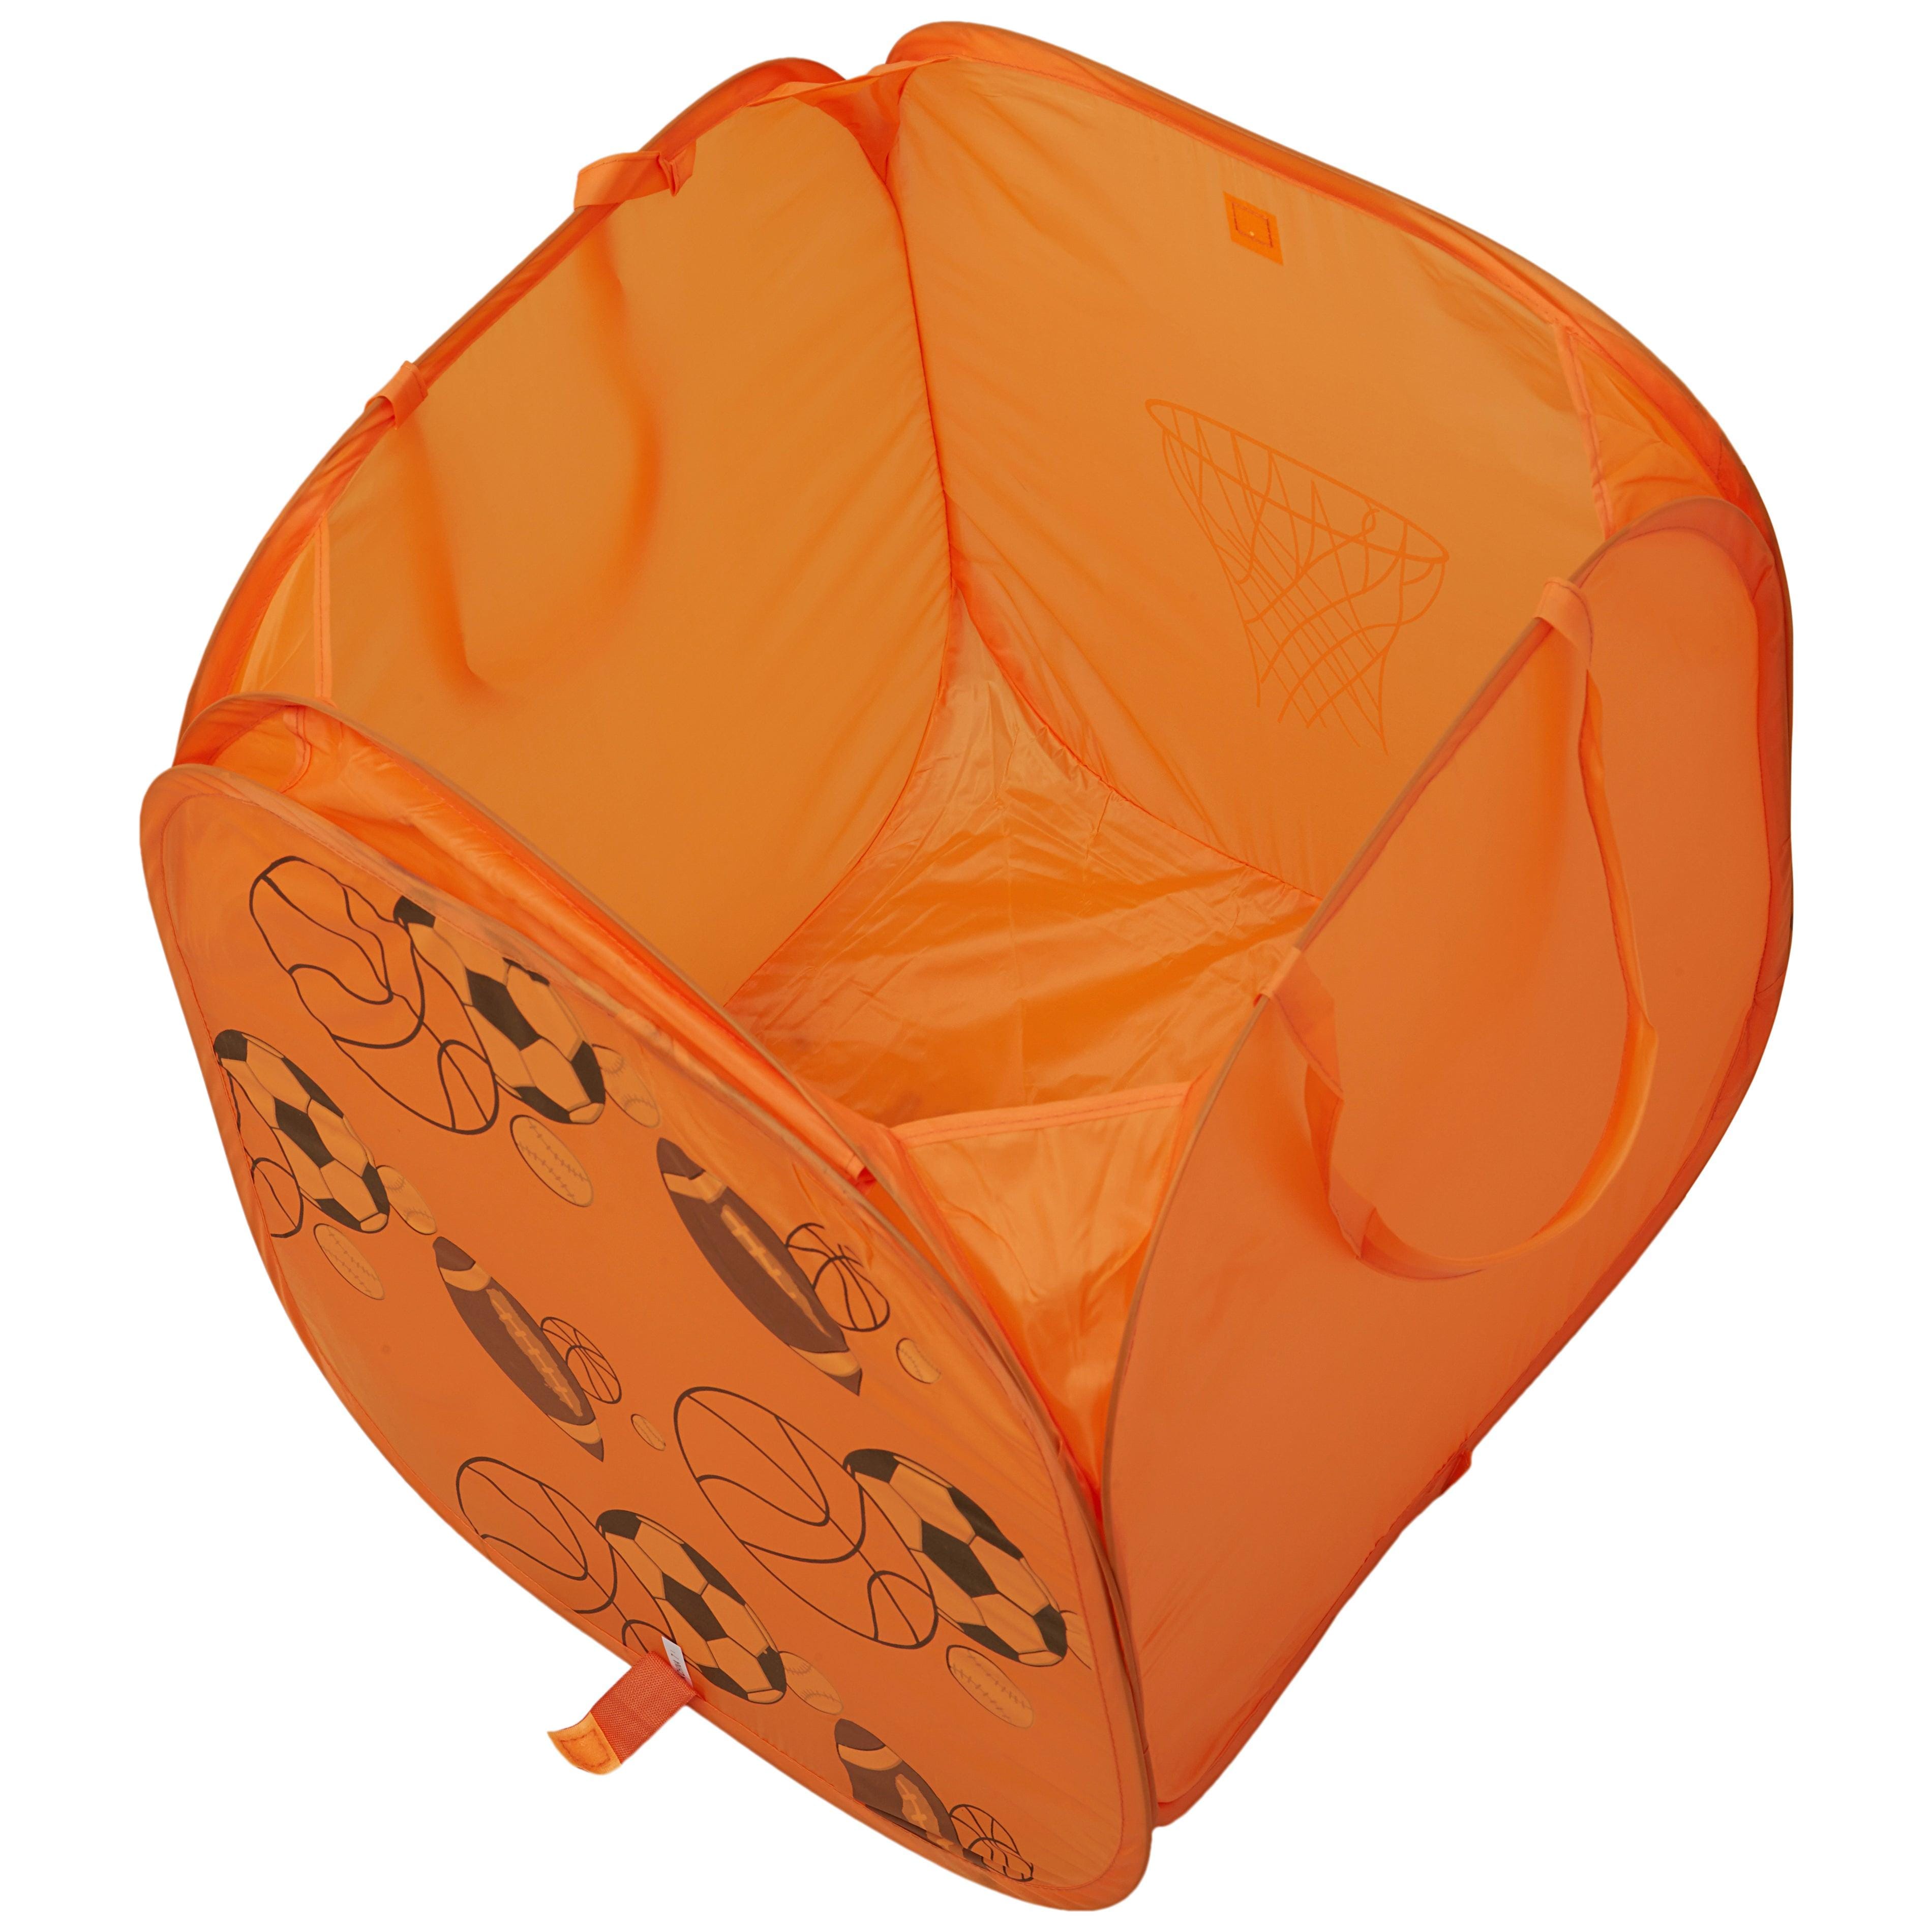 Kids Storage Cube - Orange Sport Ball